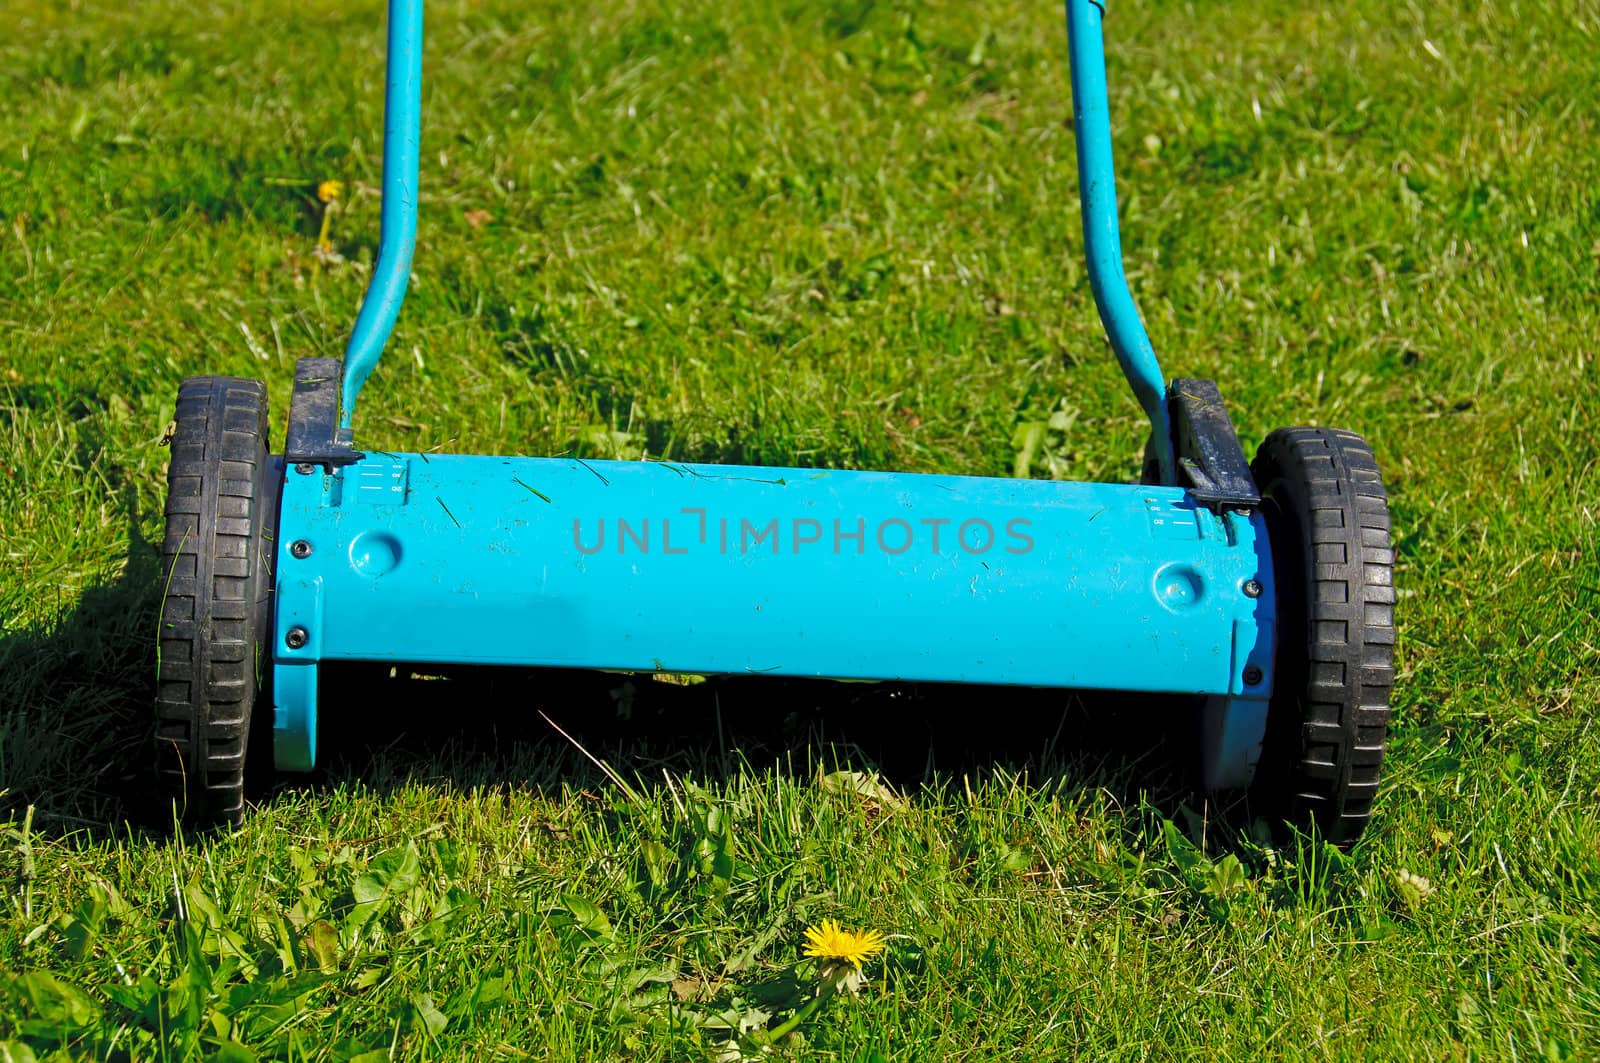 A blue/green manual lawn mower on grass